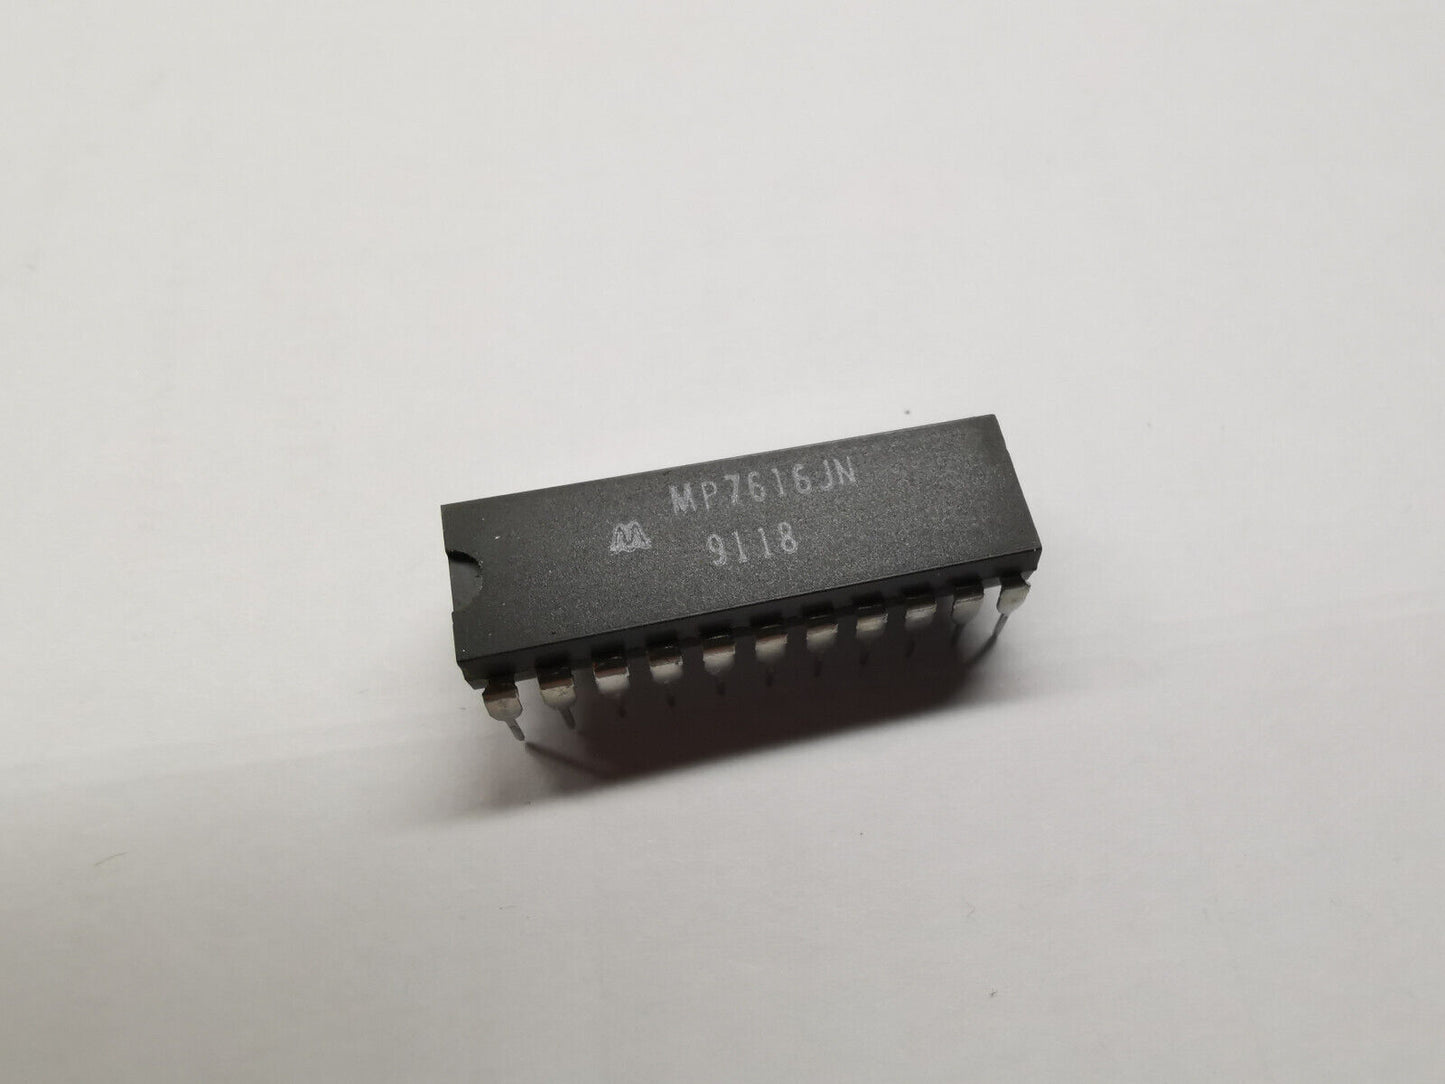 Genuine EXAR MP7616JN 16 Bit Digital To Analog Converter